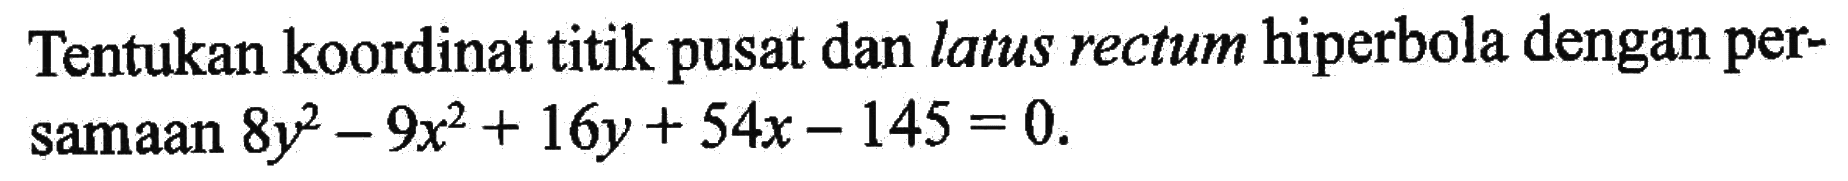 Tentukan koordinat titik pusat dan latus rectum hiperbola dengan per- samaan 8y^2-9x^2+16y+54x-145=0.